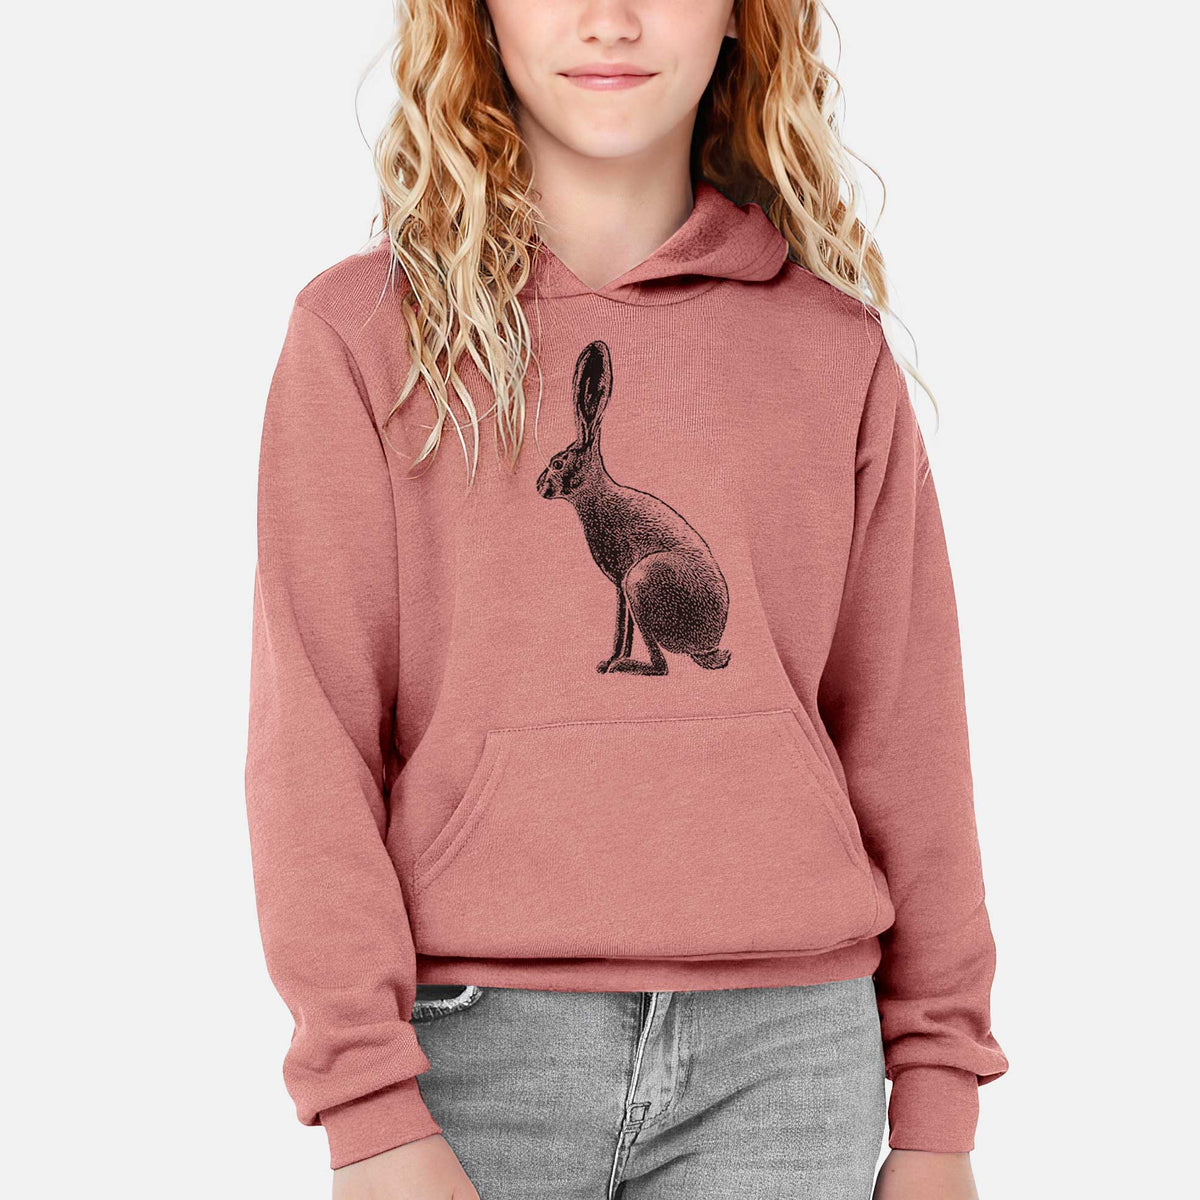 Wild California Hare - Black-tailed Jackrabbit - Youth Hoodie Sweatshirt